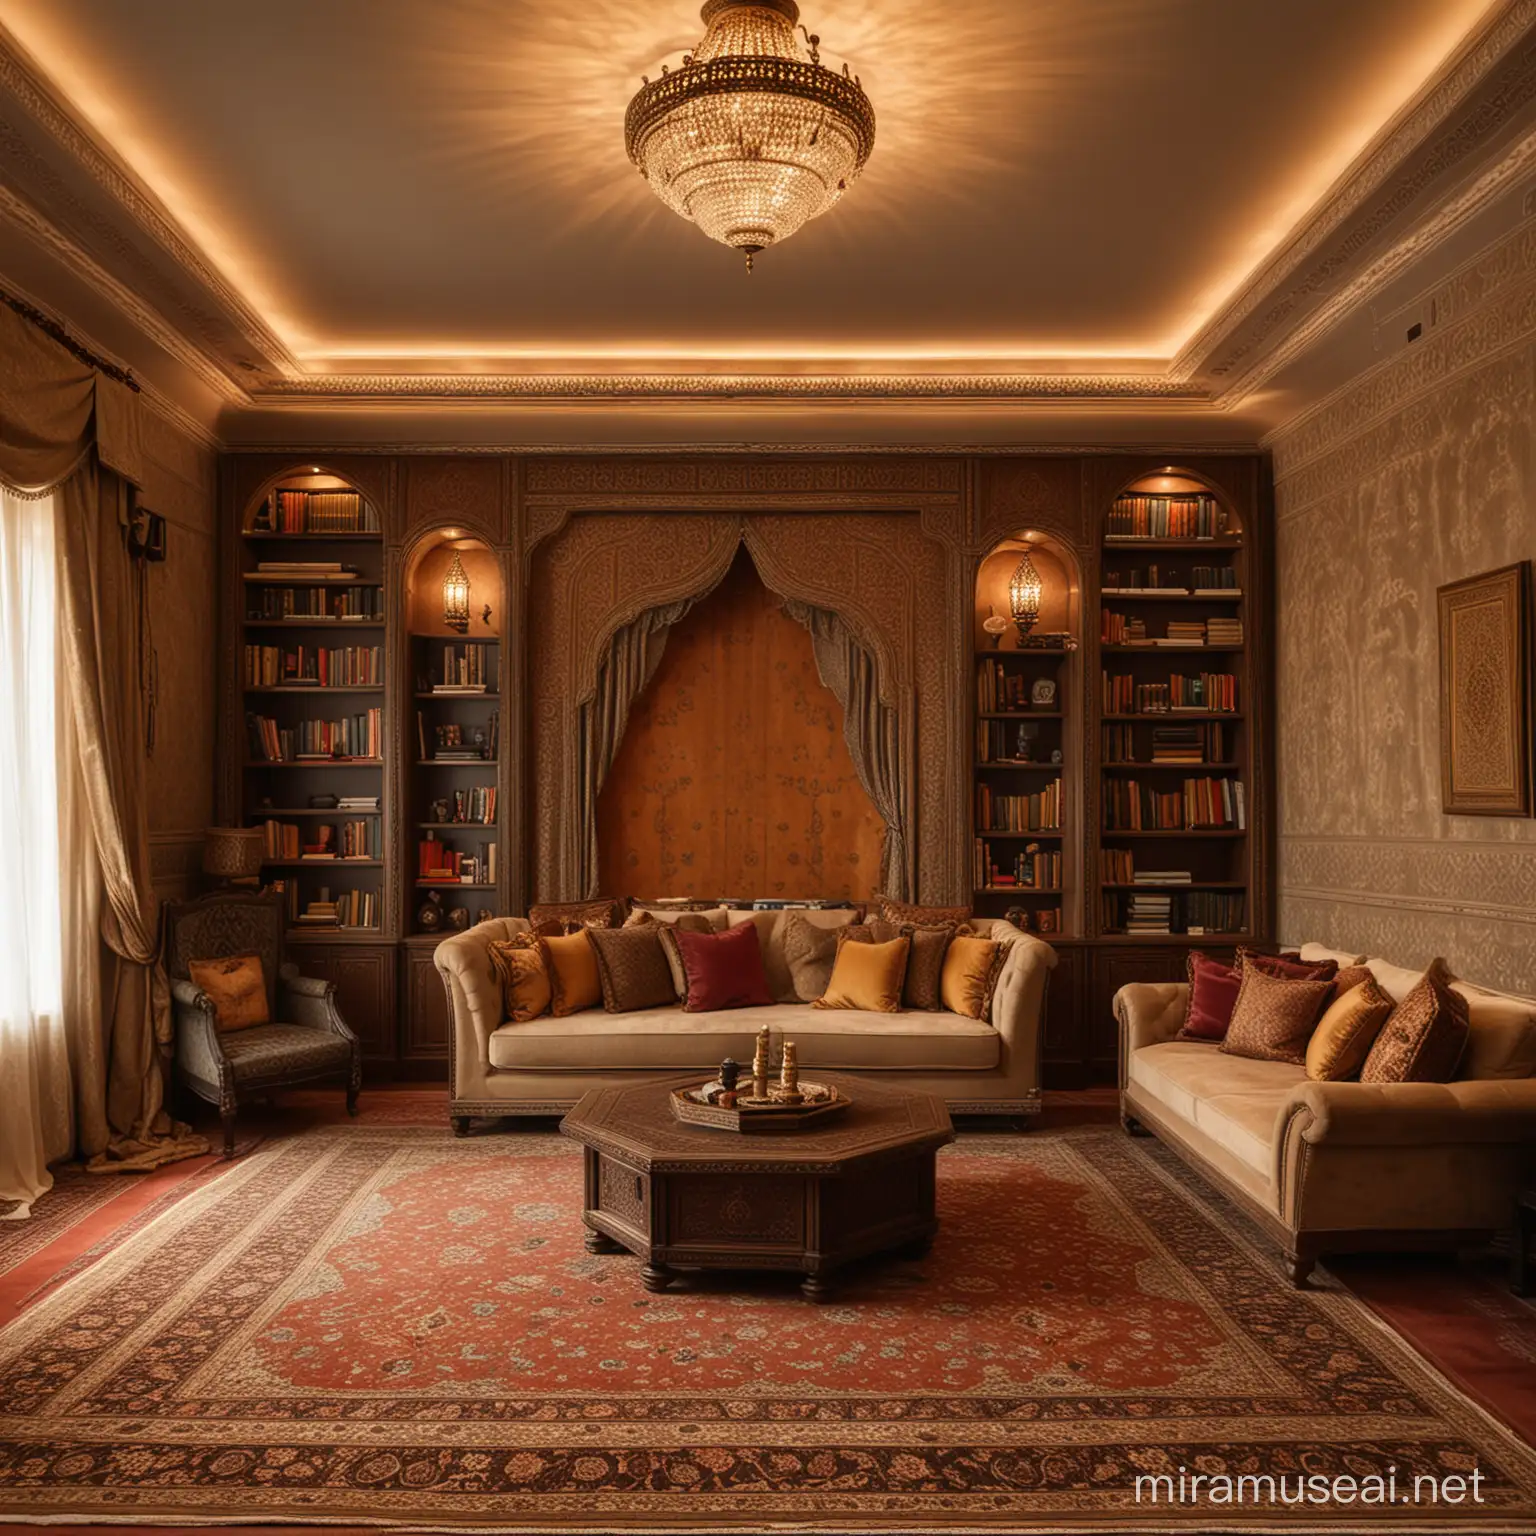 Islamic Room Decor Featuring Sofa Carpet Bookshelf and Rembrandt Lighting